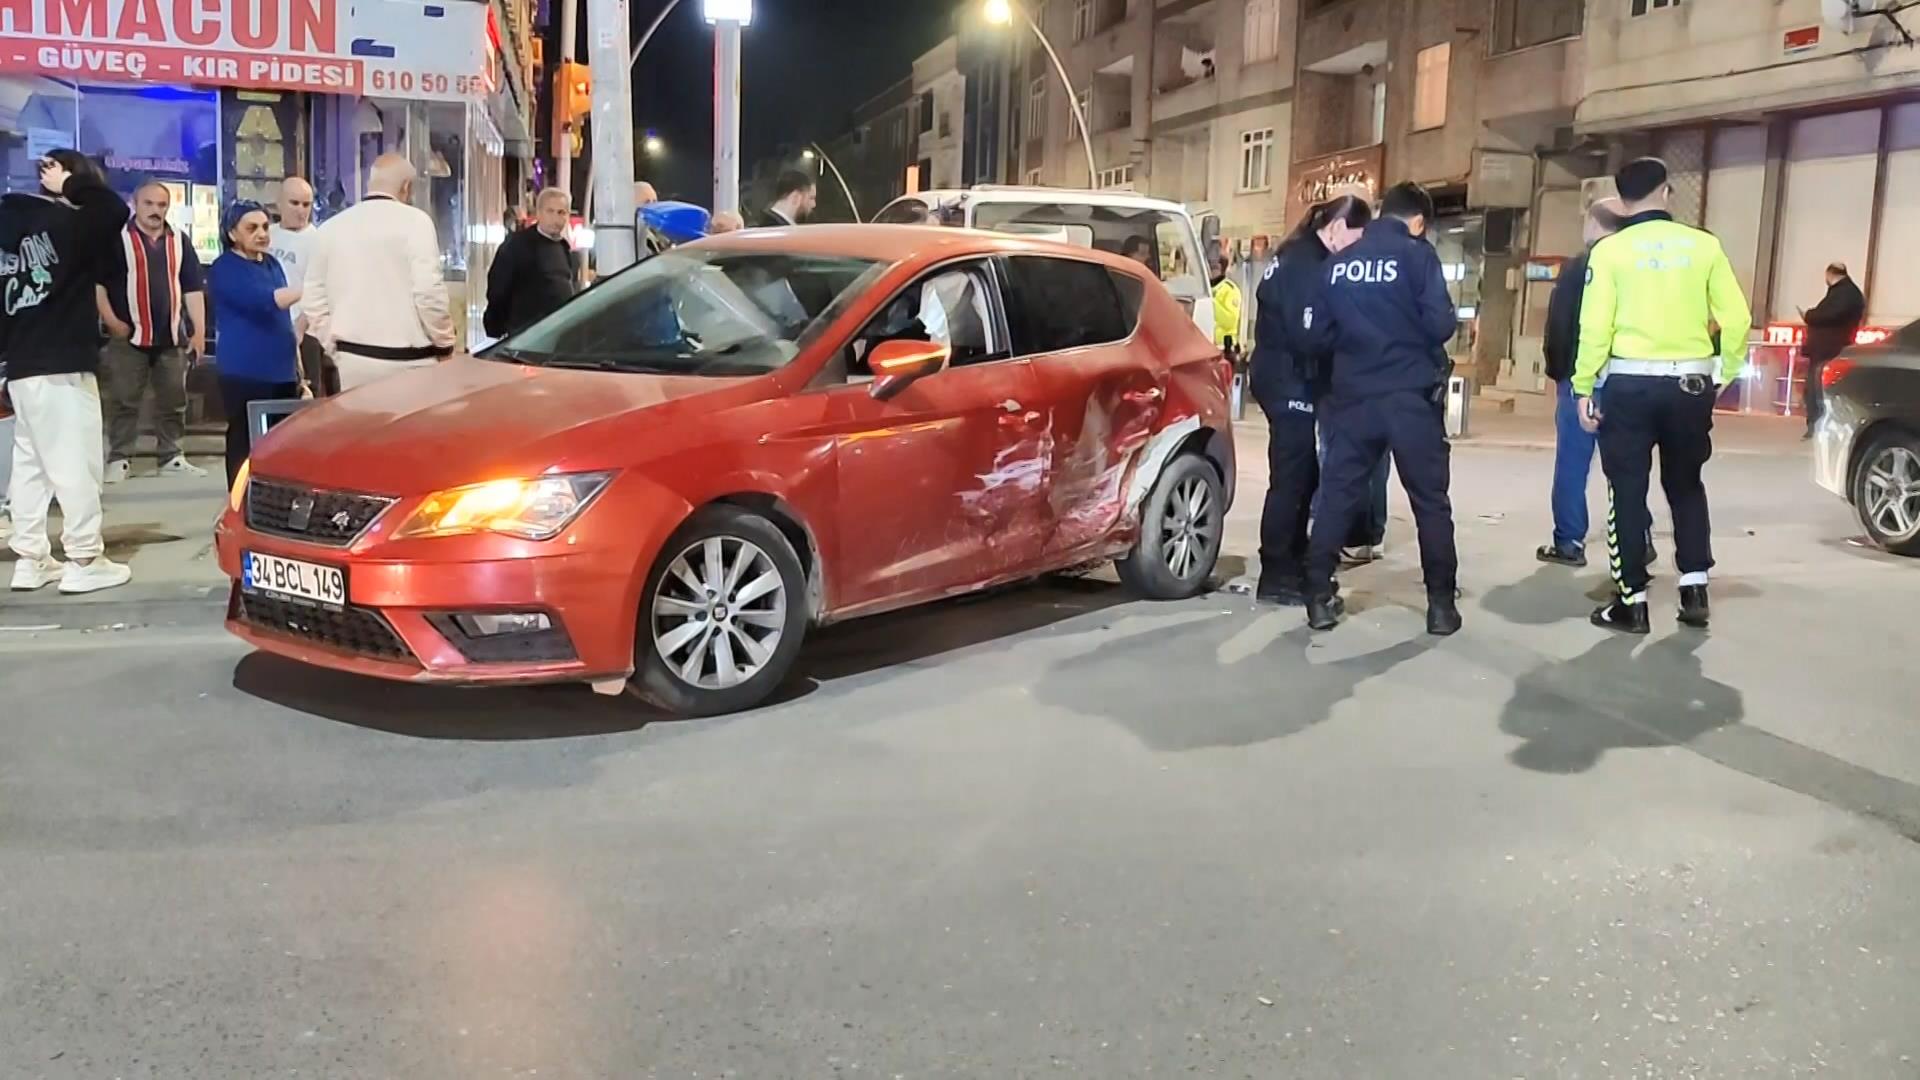 istanbul-sultangazide-kaza-yapan-otomob-40060-2.jpg